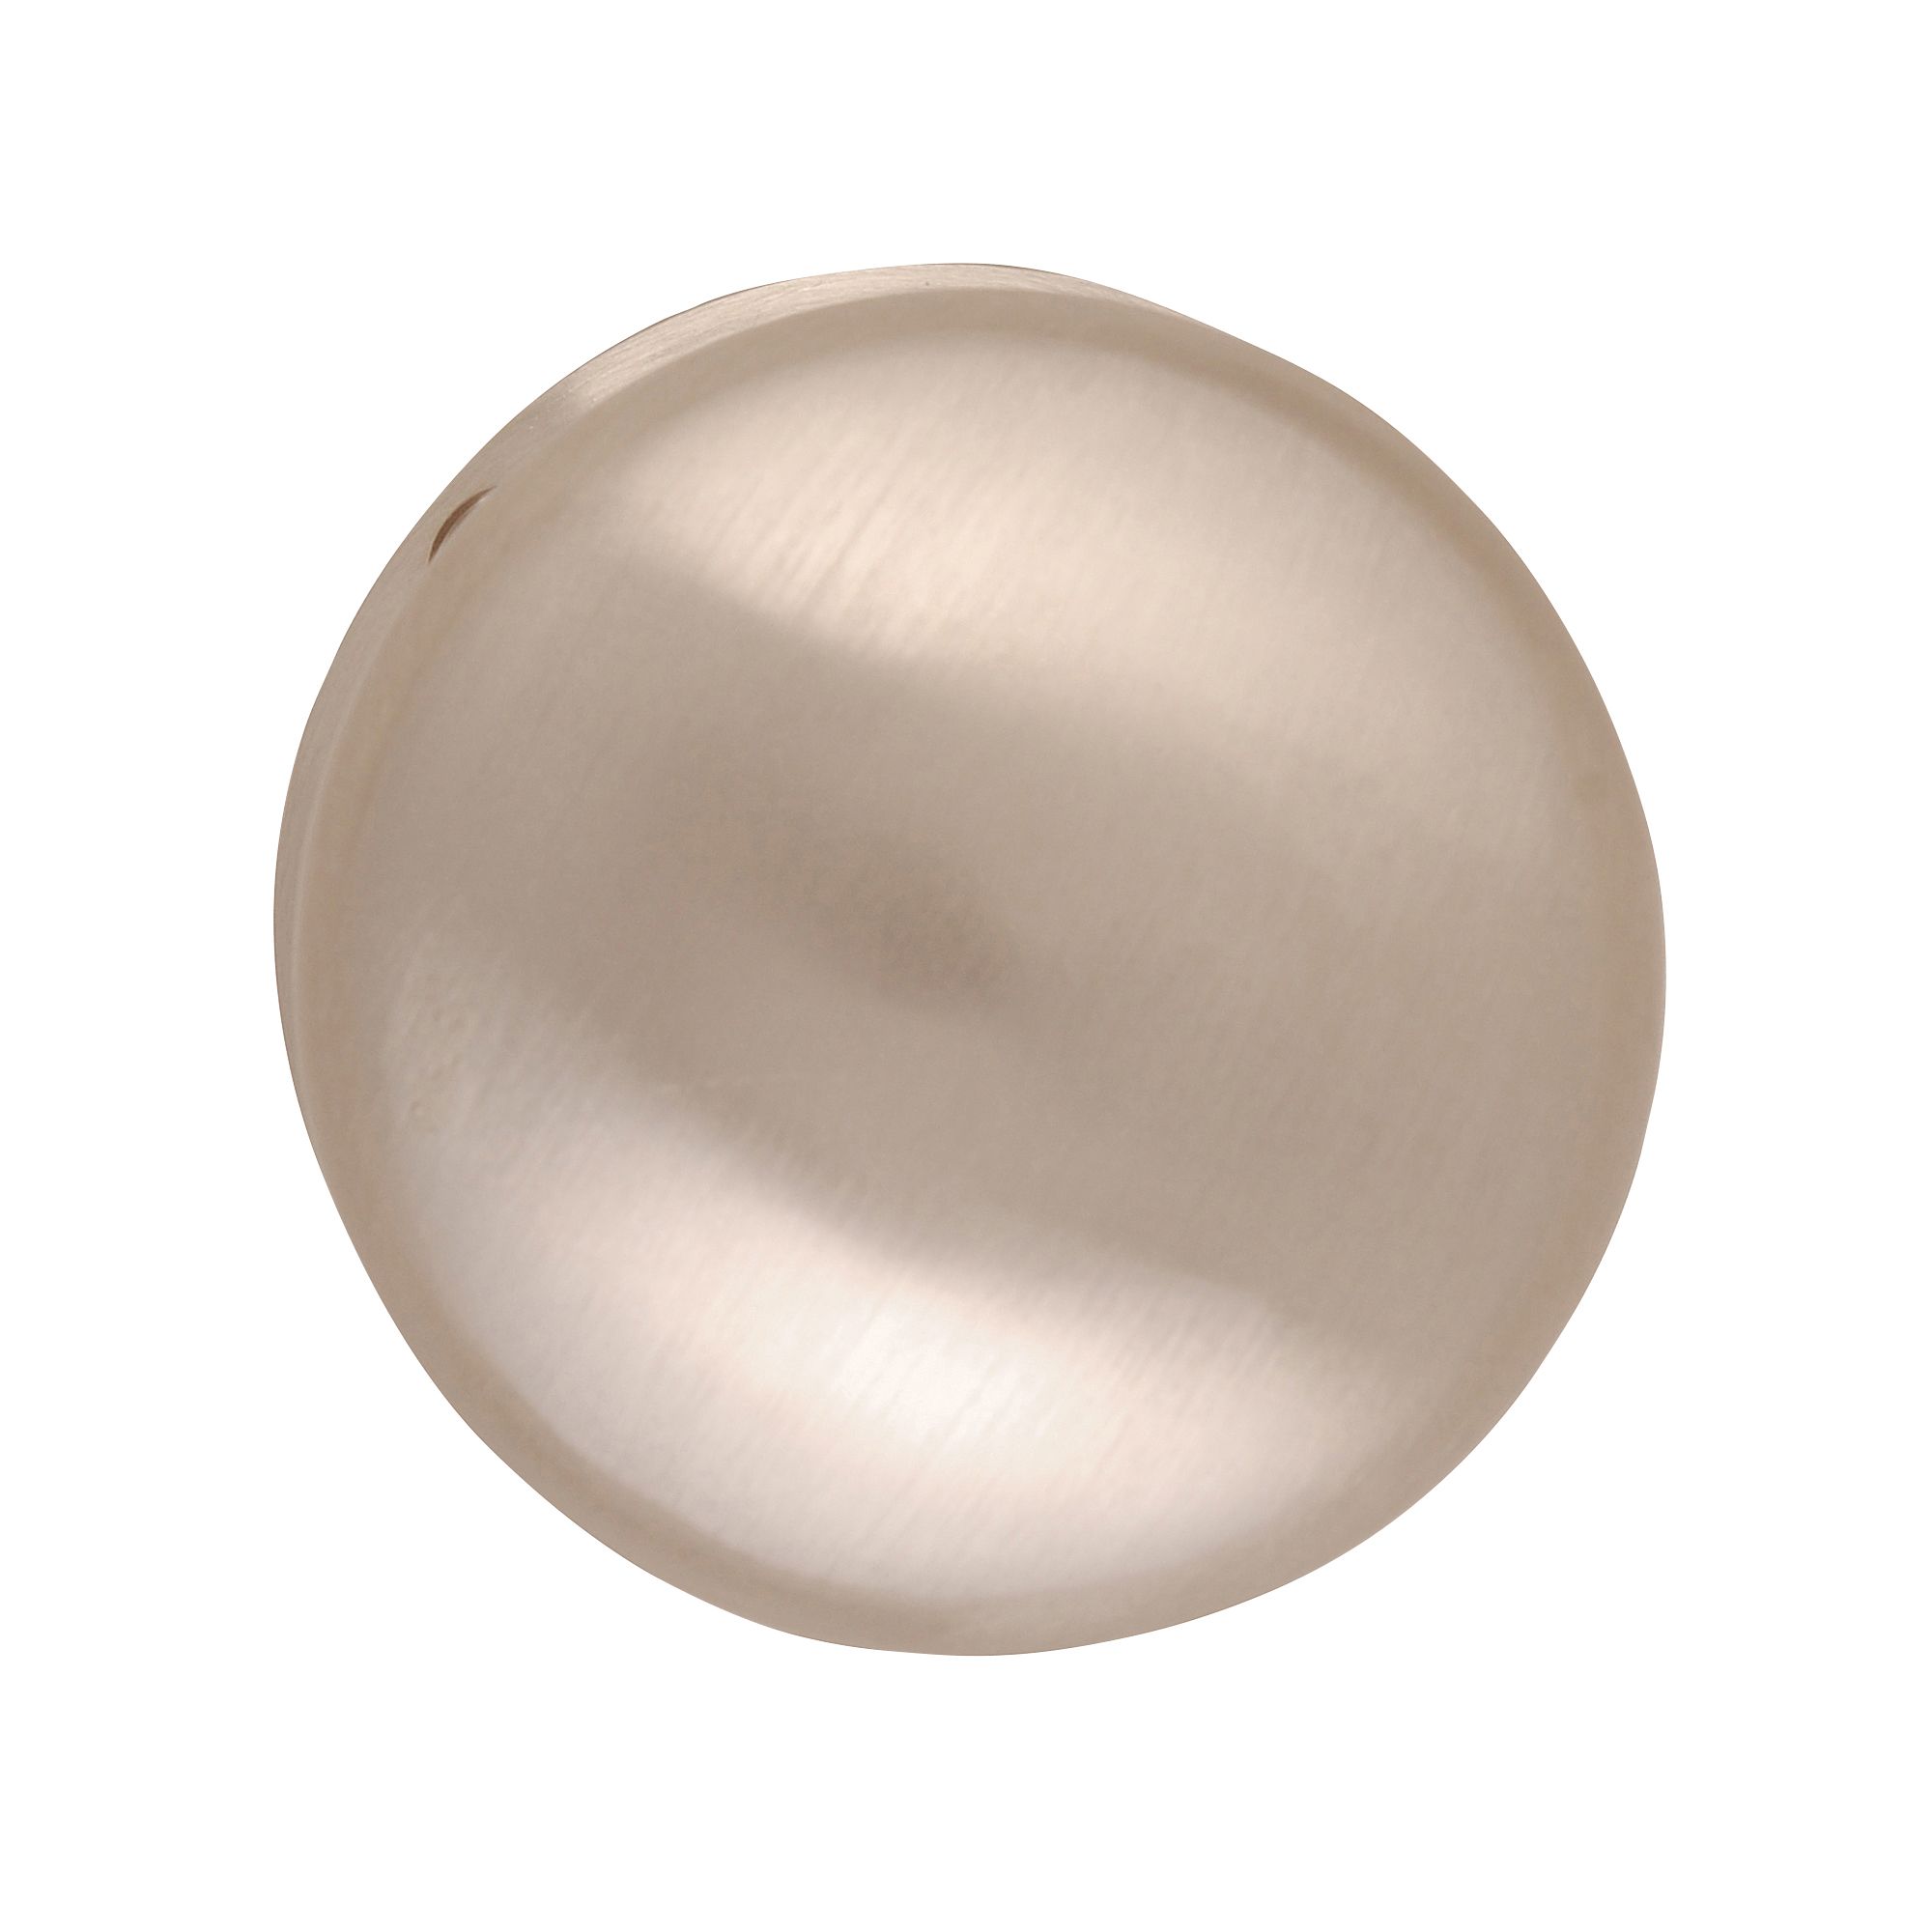 Satin Nickel effect Zamac Round Door knob (Dia)54mm, Pair